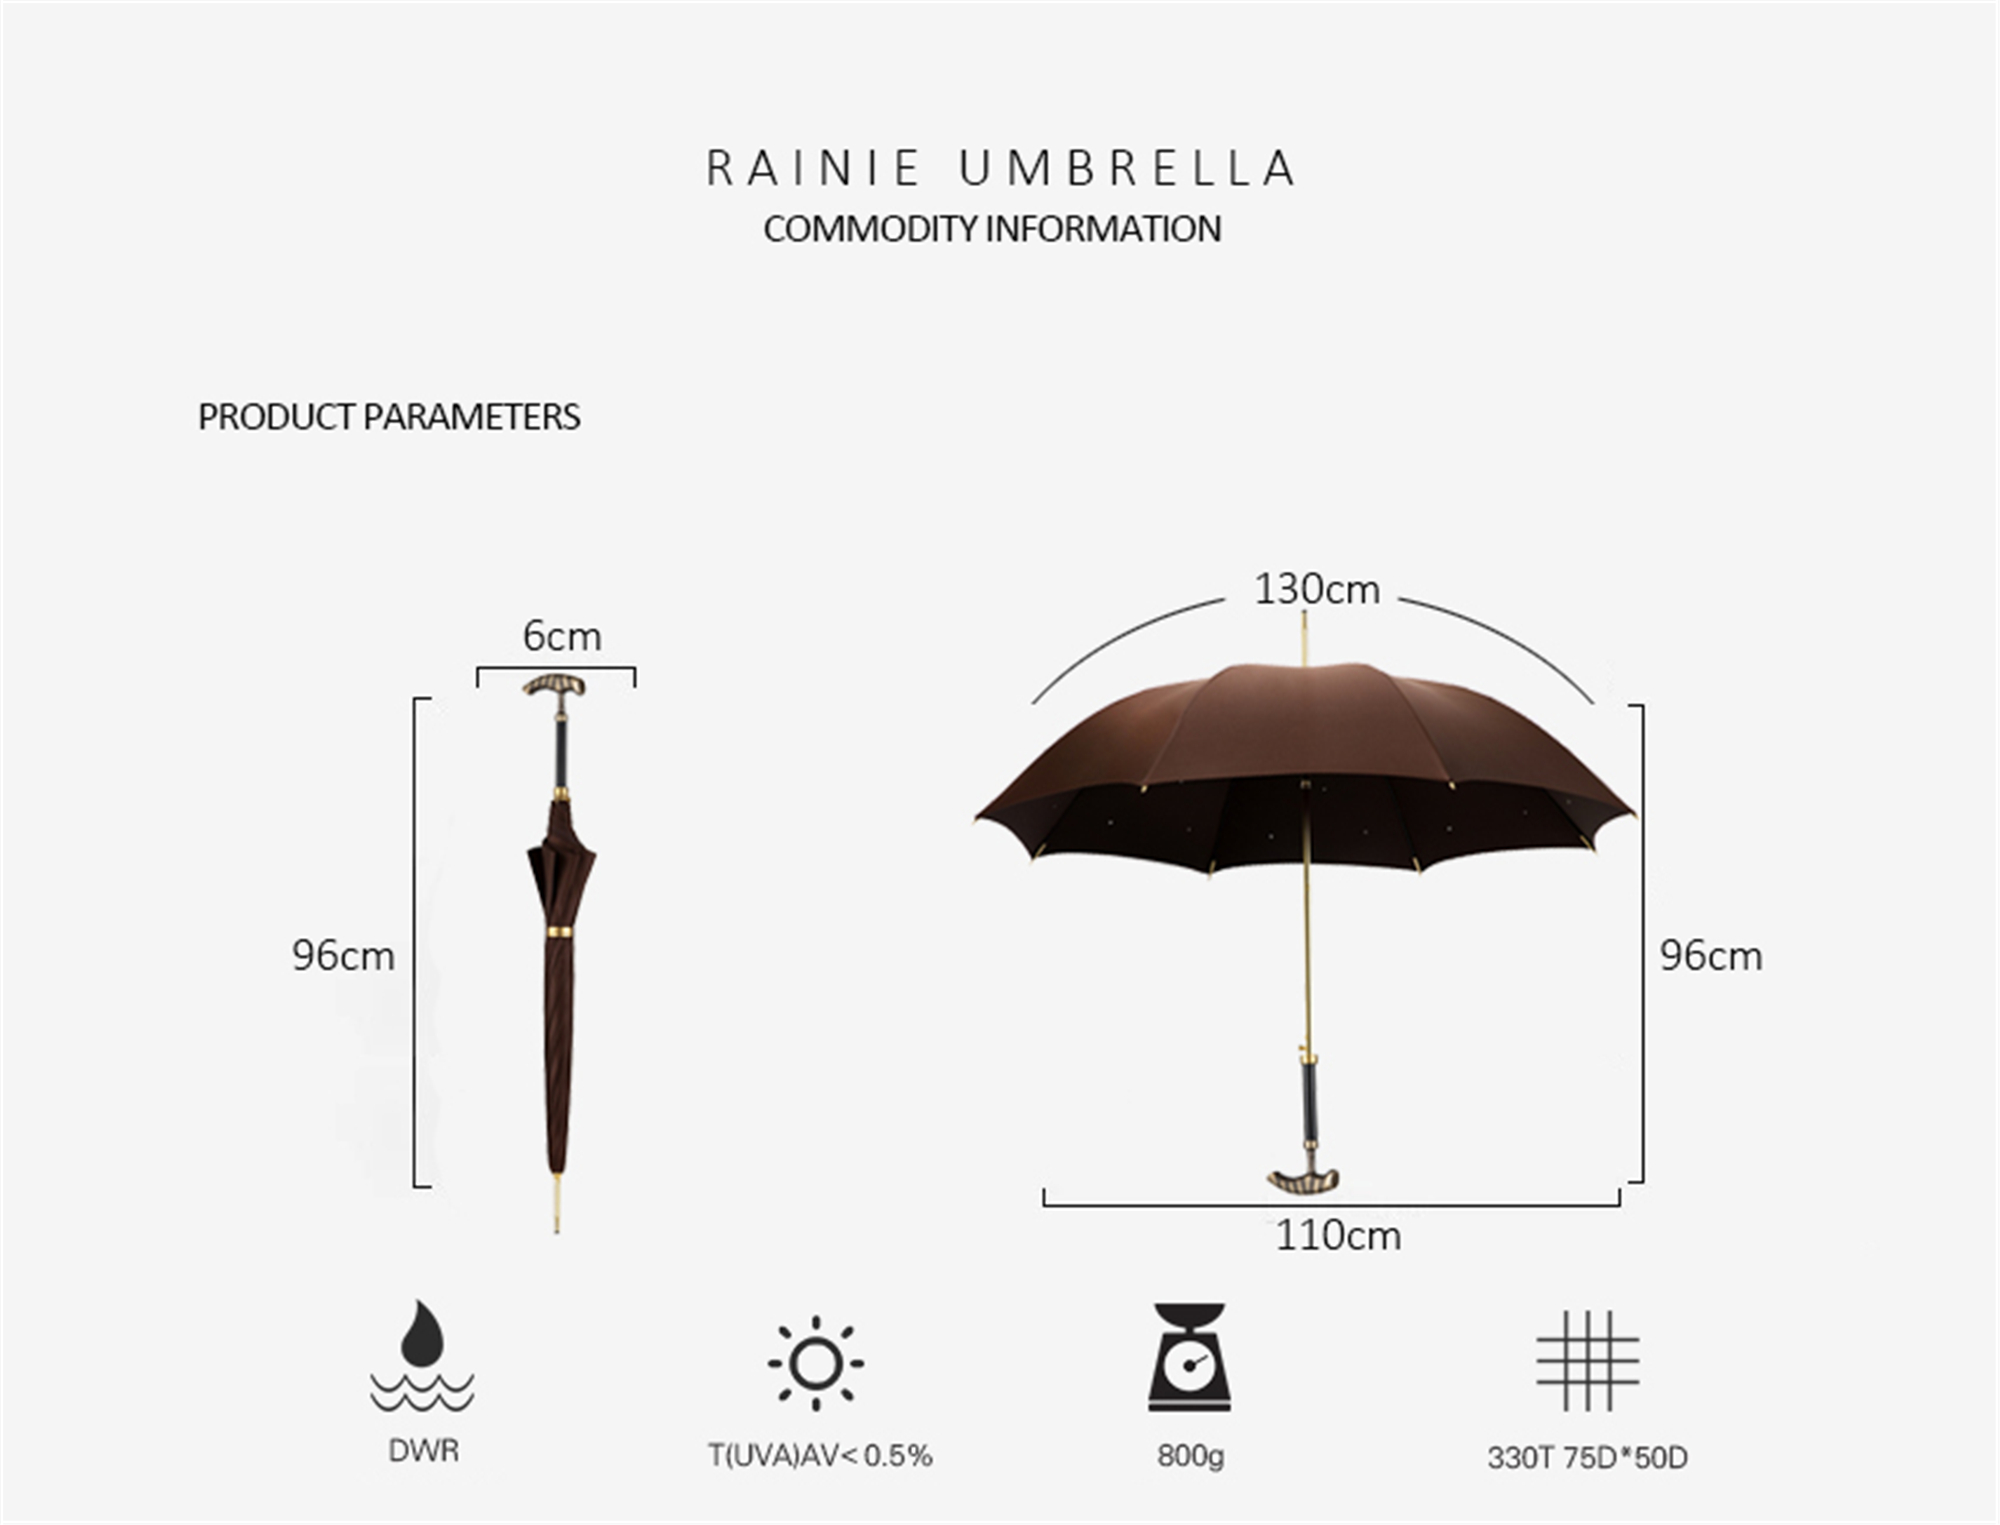 Bronze wand with long handle umbrella